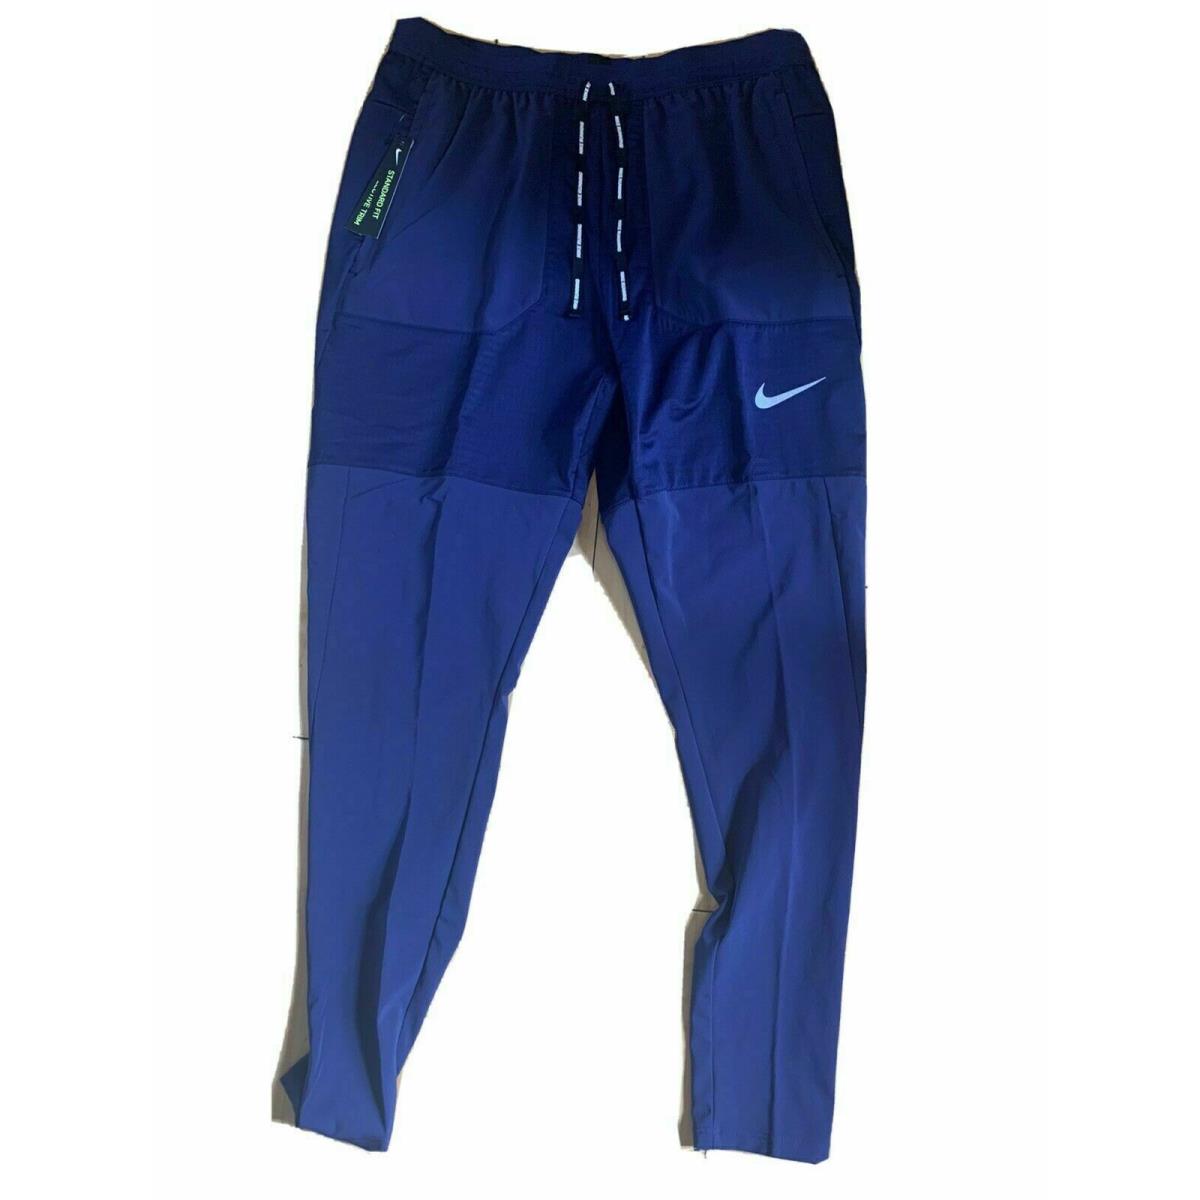 Men`s Nike Dry Phantom Hybrid Running Pants M Purple Training Tight Fit CK1458